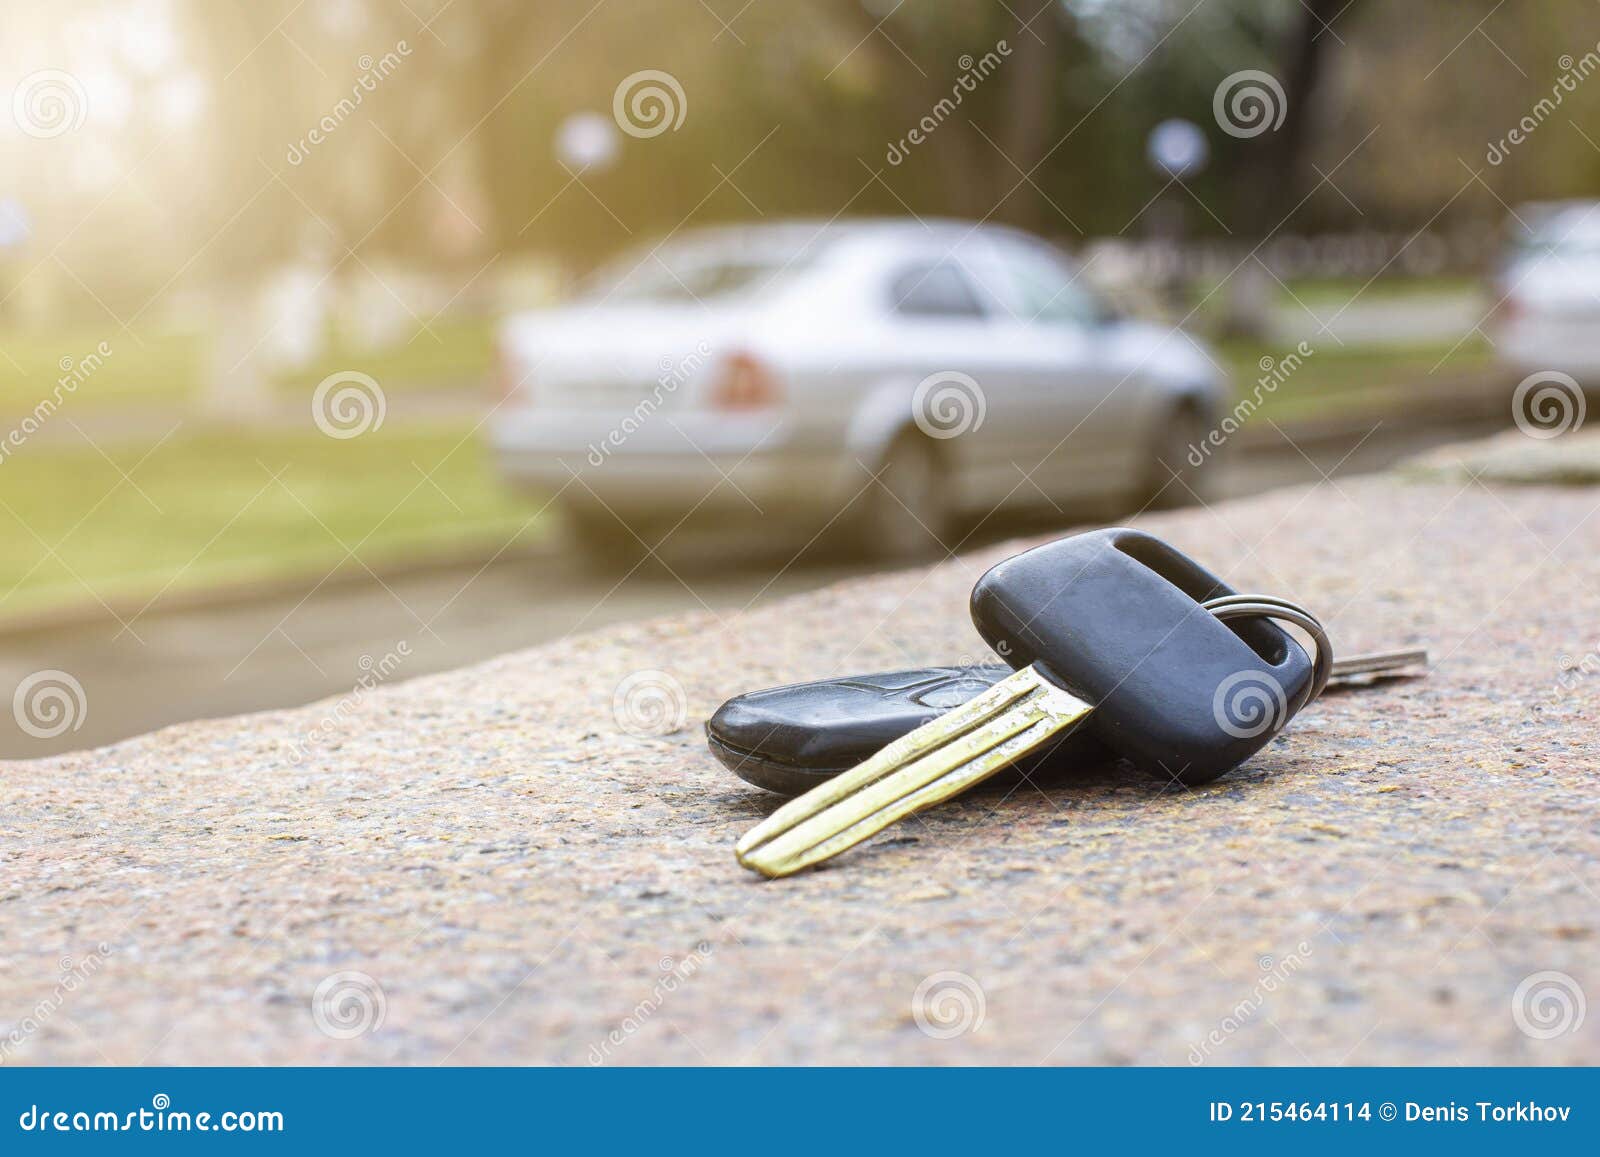 https://thumbs.dreamstime.com/z/car-key-fall-asphalt-road-driver-lost-his-vehicle-keys-walks-away-misfortune-concept-blurred-foreground-background-215464114.jpg